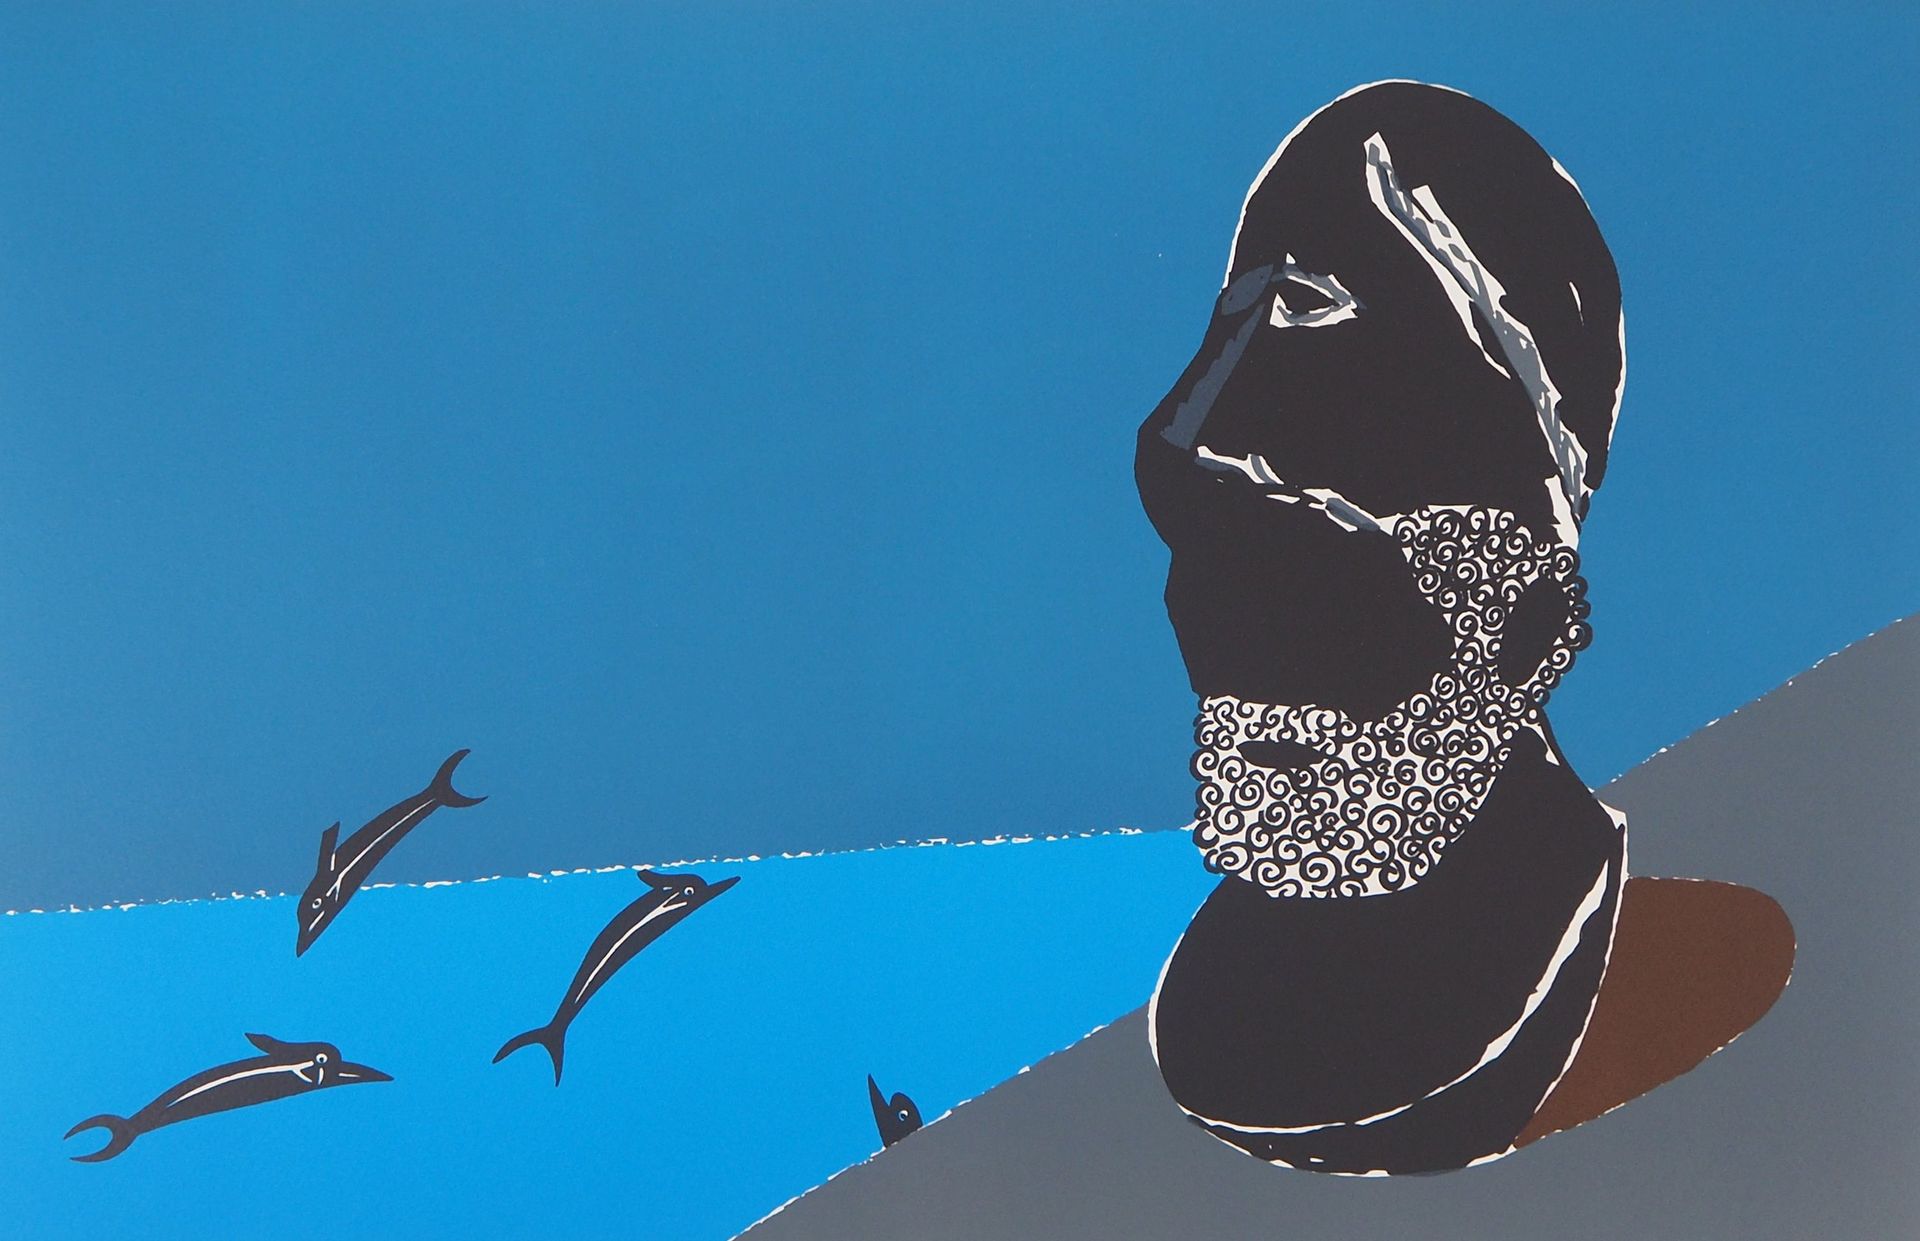 Eduardo ARROYO Eduardo ARROYO

超现实主义的梦，1984年

原始石版画

铅笔签名的艺术家

在Arches羊皮纸上，61 x &hellip;